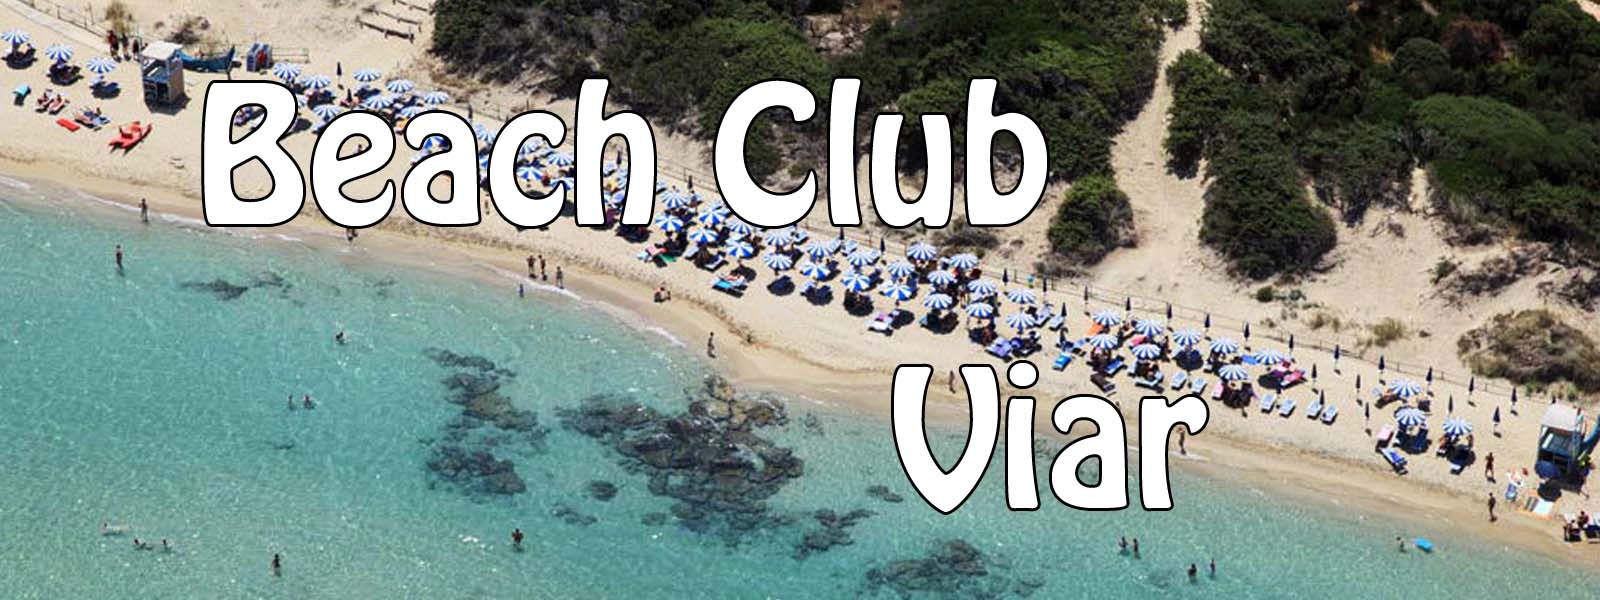 Viar Beach Club sul mare di Ostuni